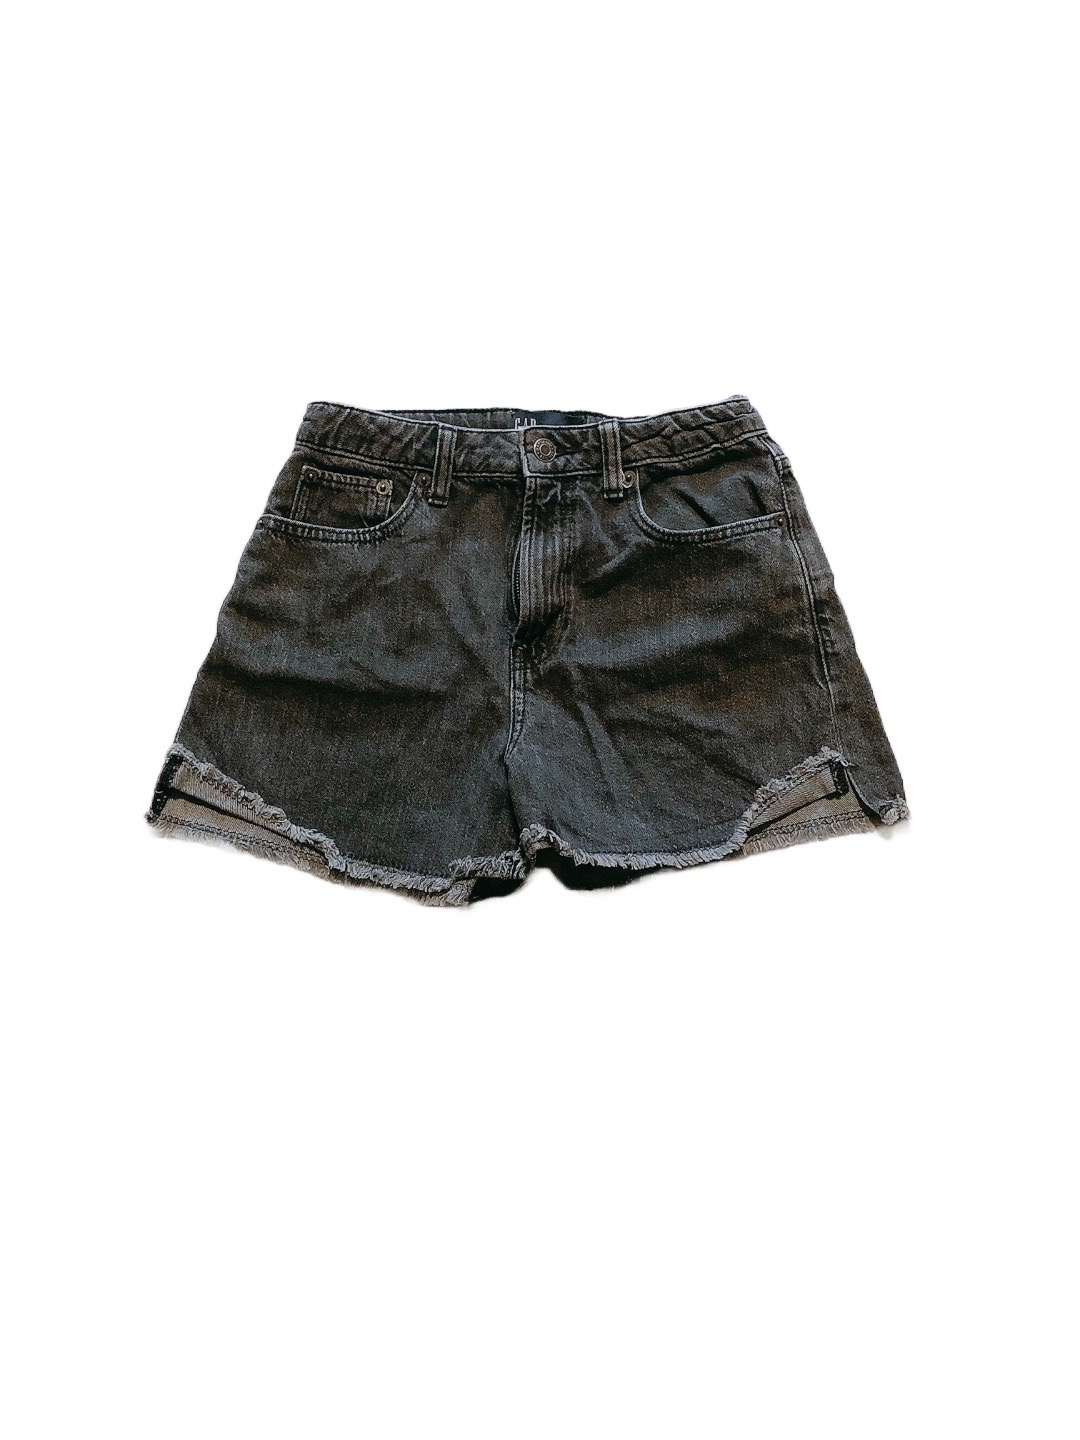 《GAP童裝》黑色牛仔短褲(14/155cm) NT$99